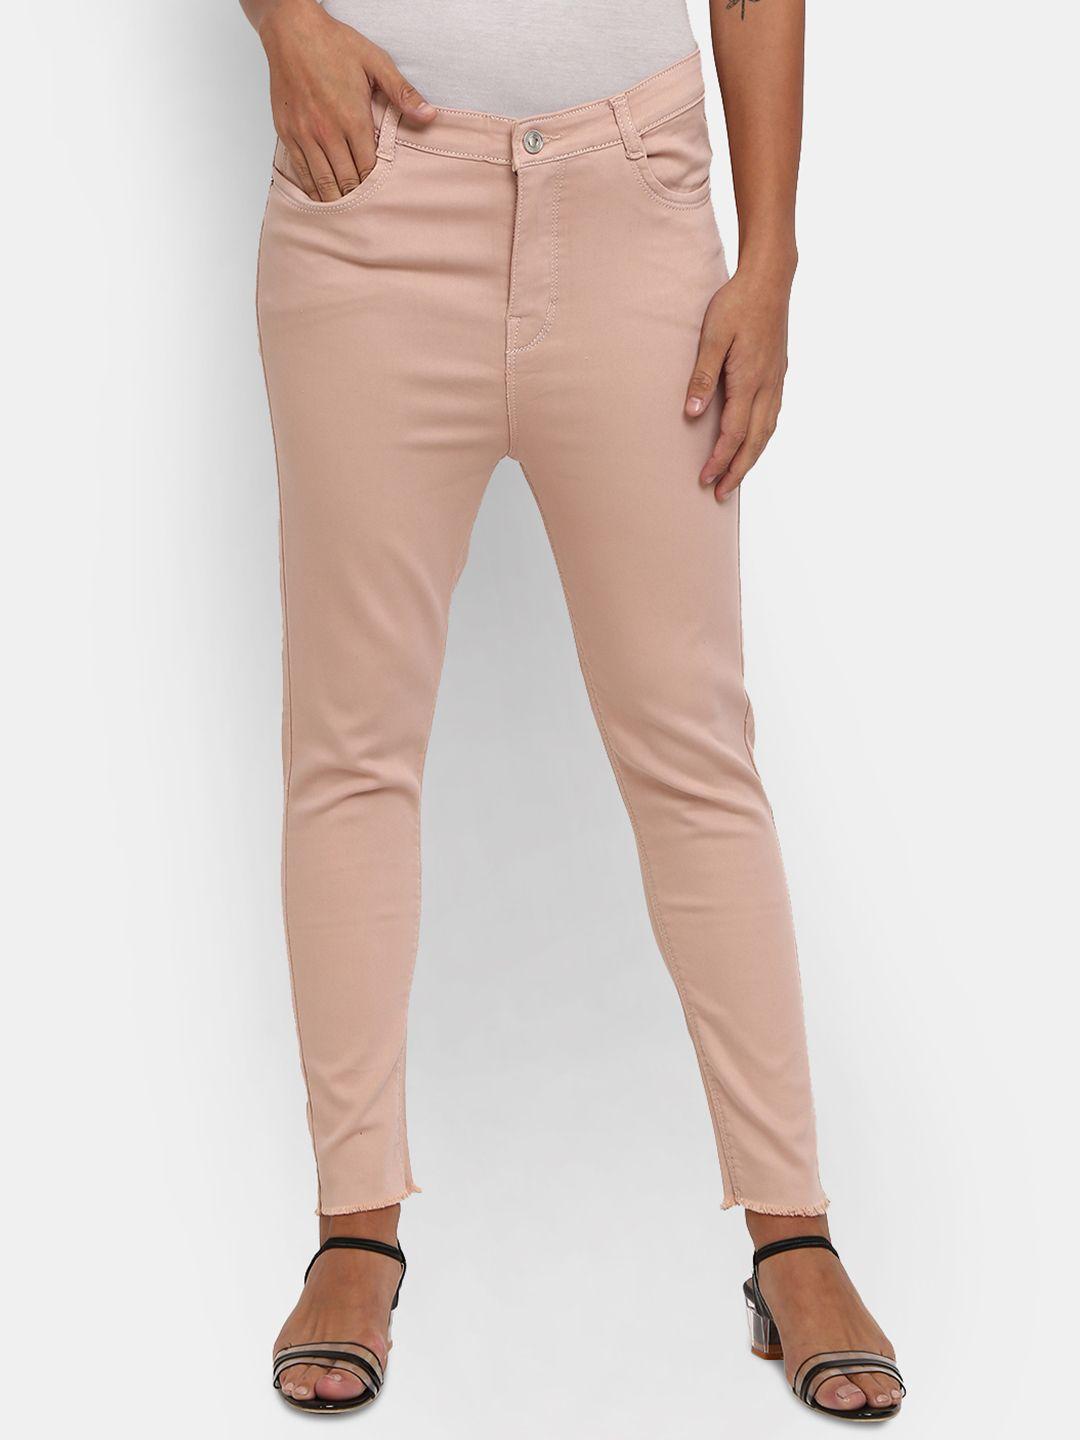 v-mart women beige raw edge coloured cotton jeans